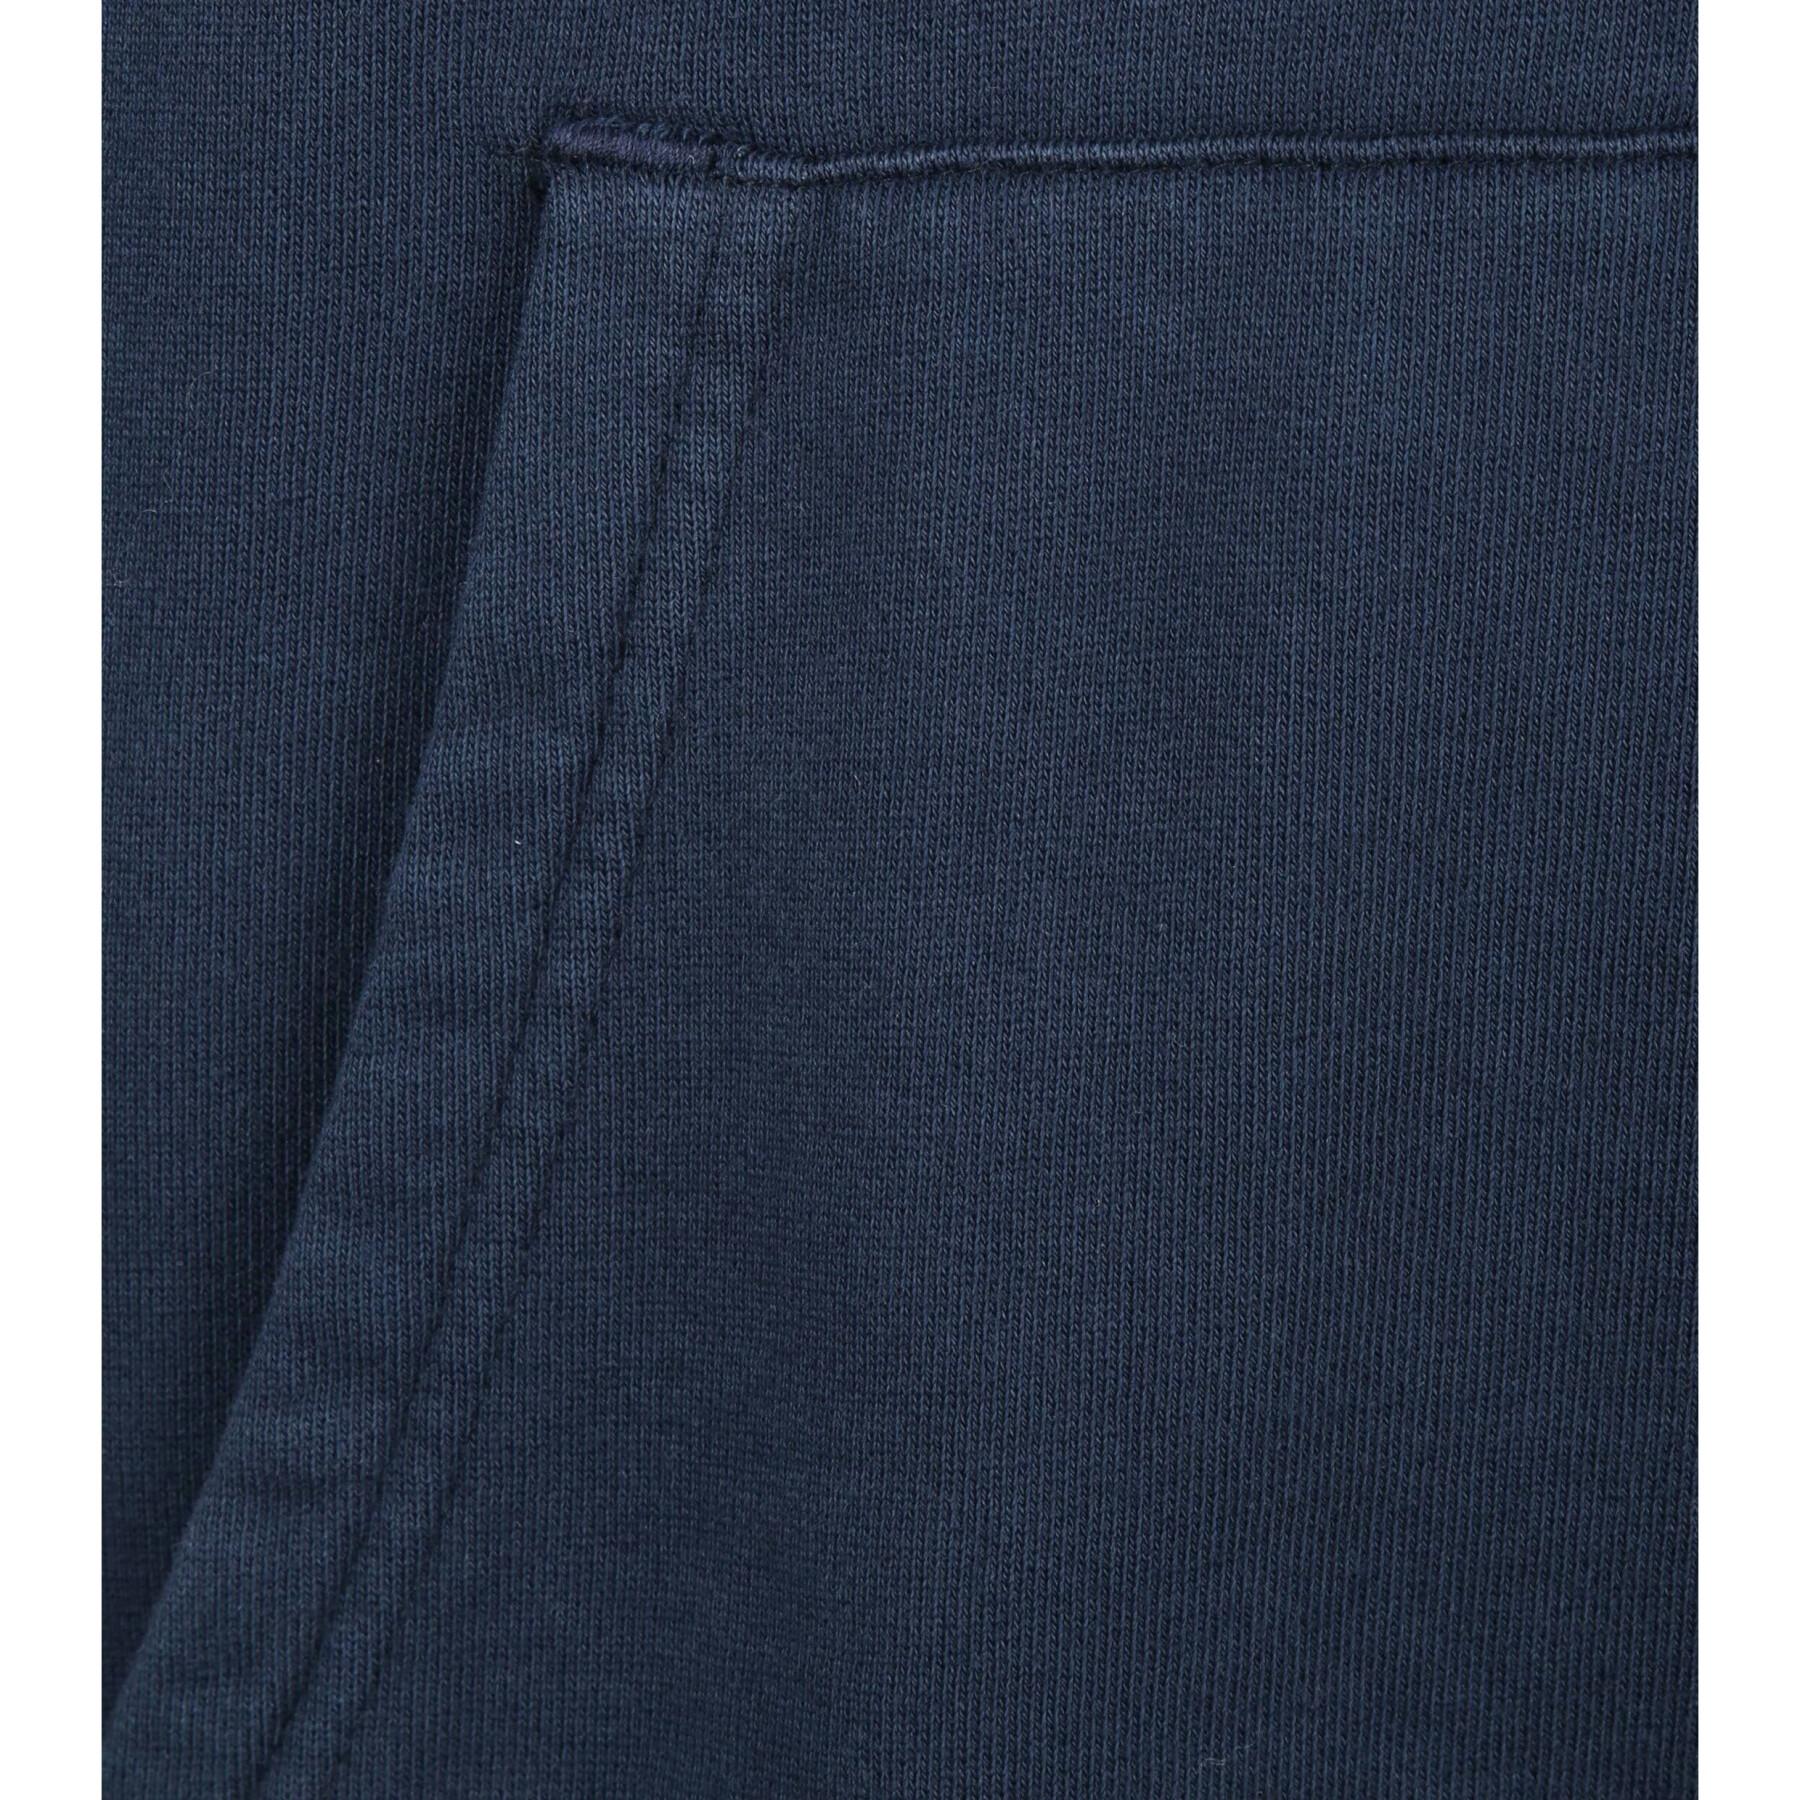 Hoodie Colorful Standard Classic Organic navy blue